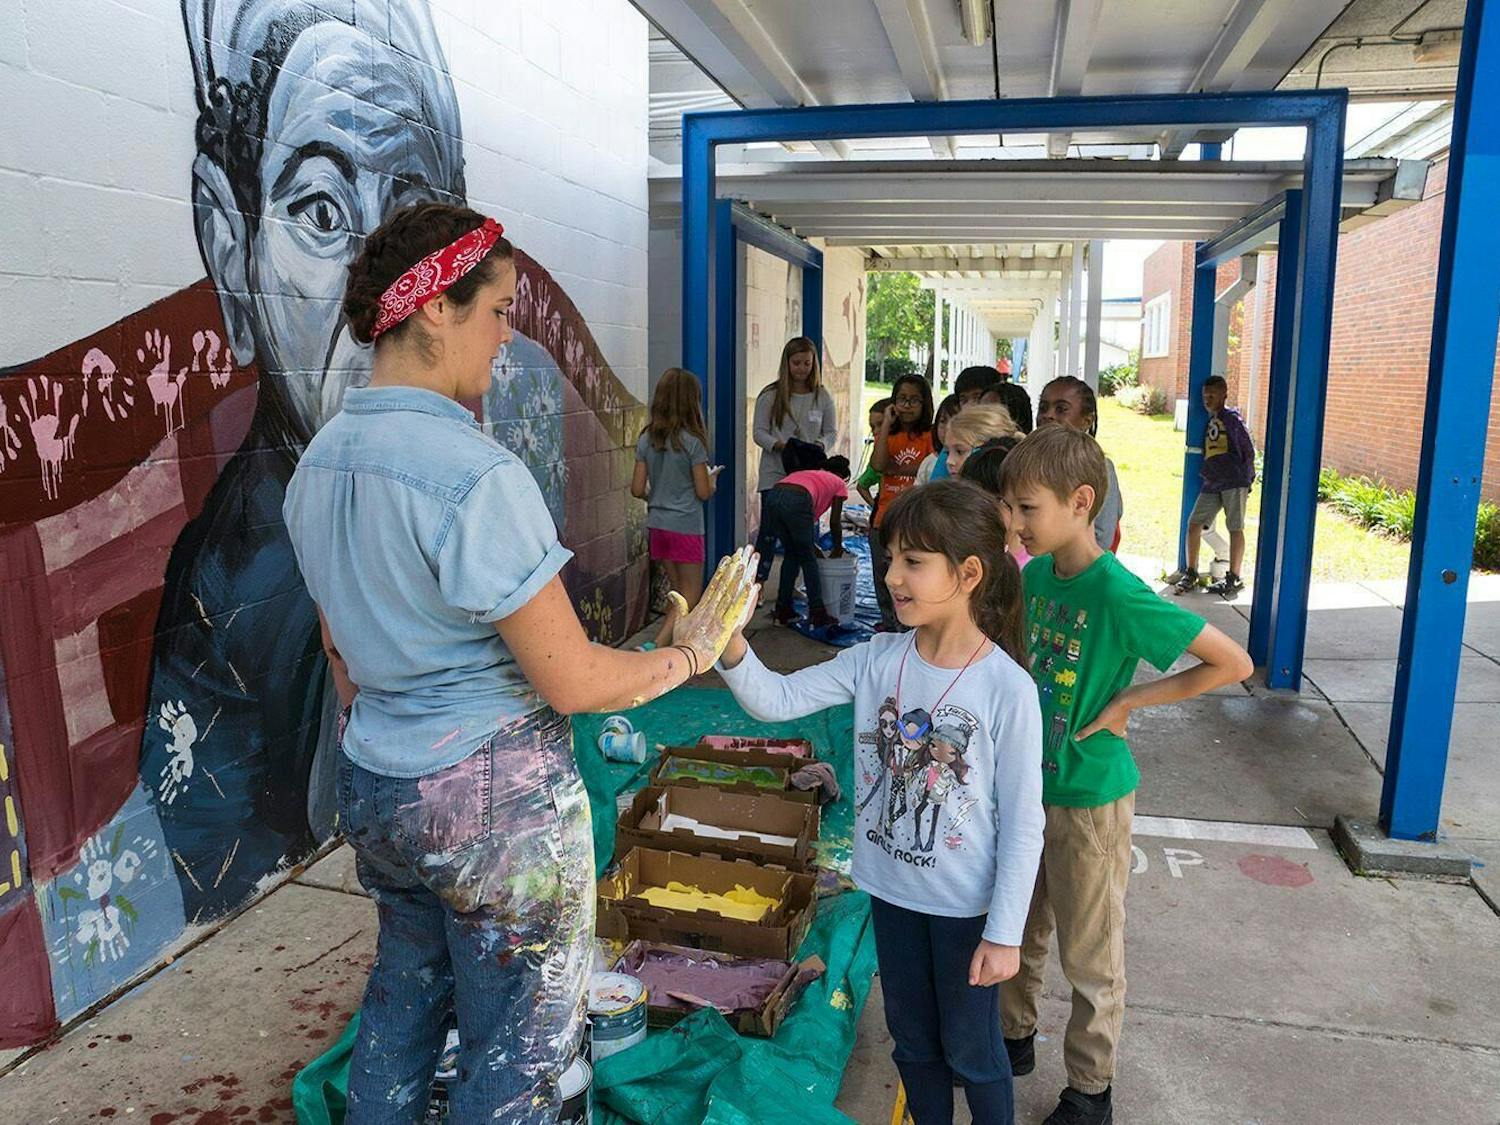 Artist Jenna Horner helps students apply paint to their hands. Photos by Iryna Kanishcheva.
&nbsp;